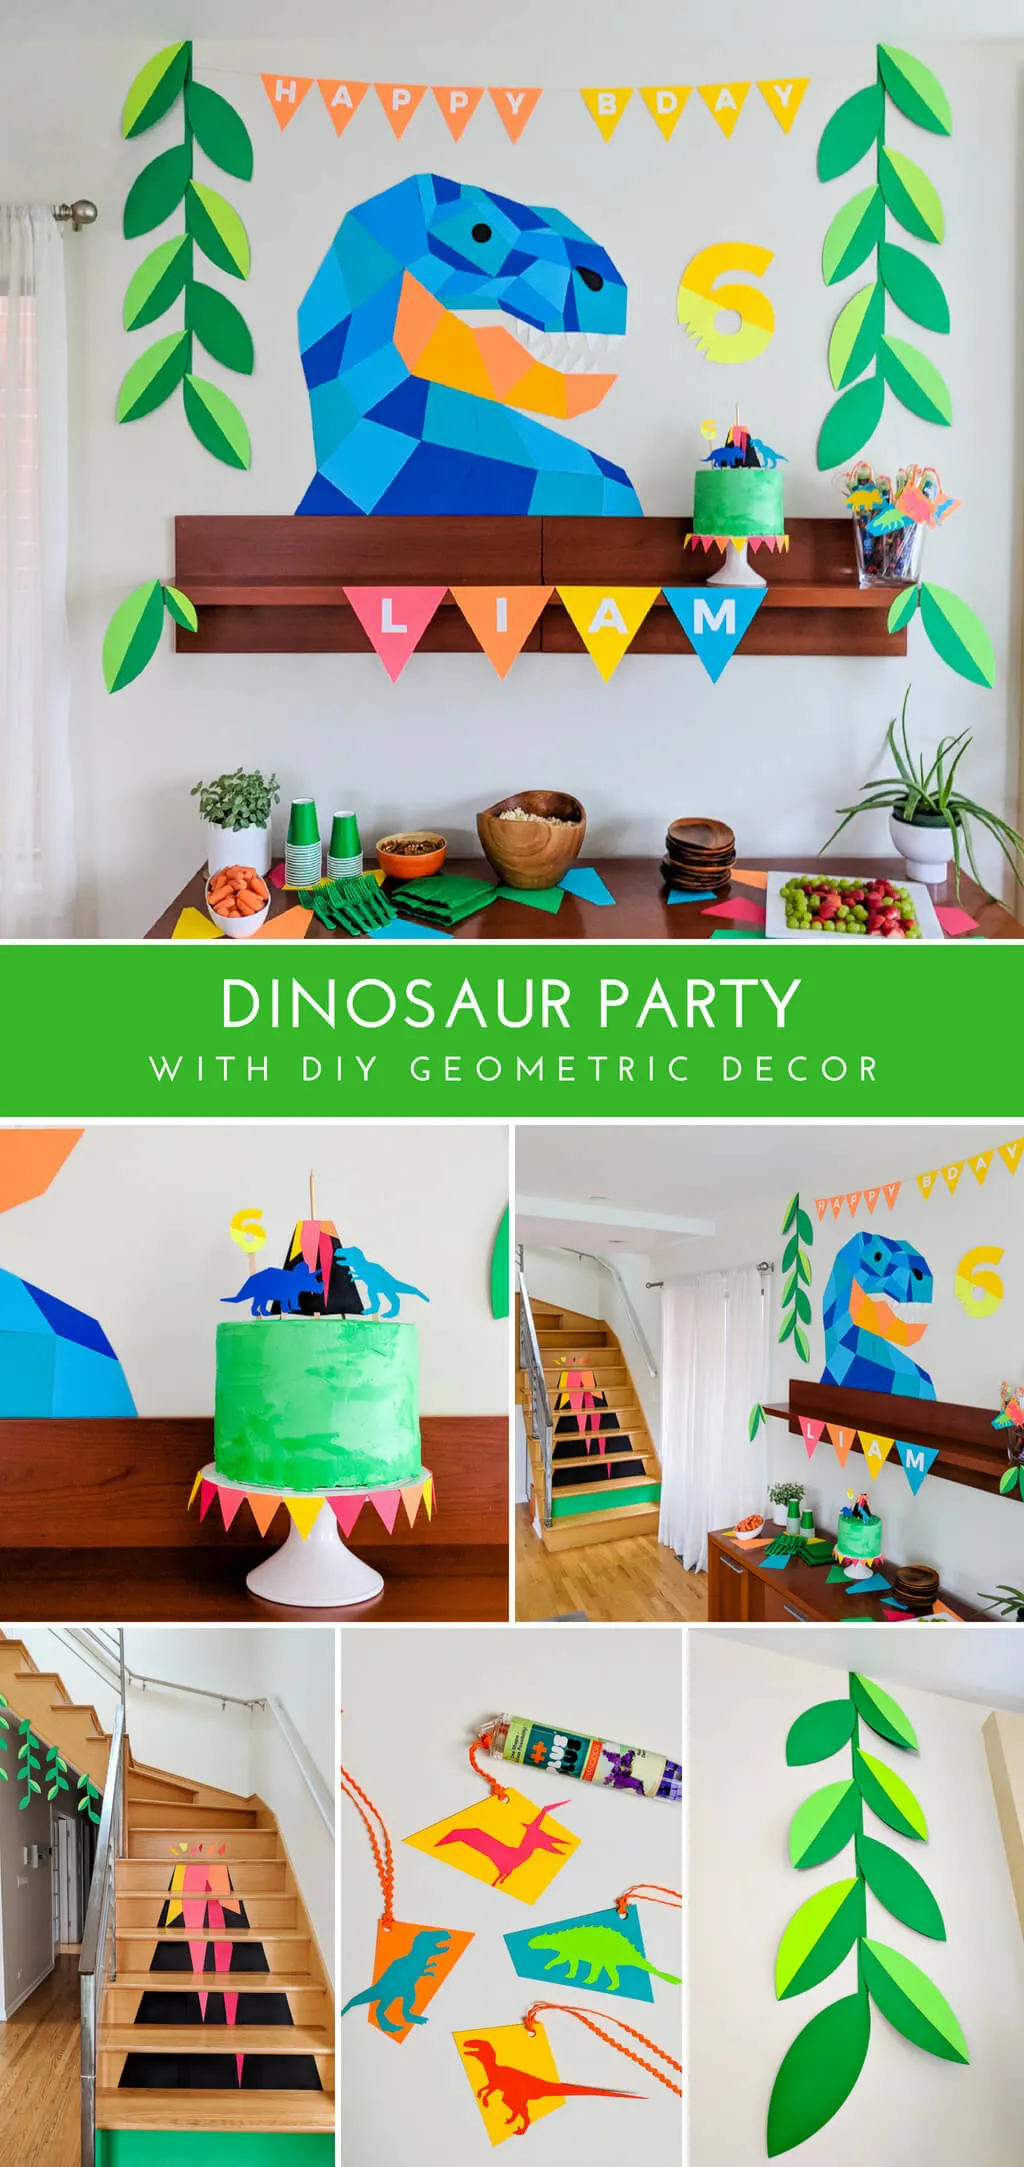 DIY geometric dinosaur birthday party decor, favors and cake